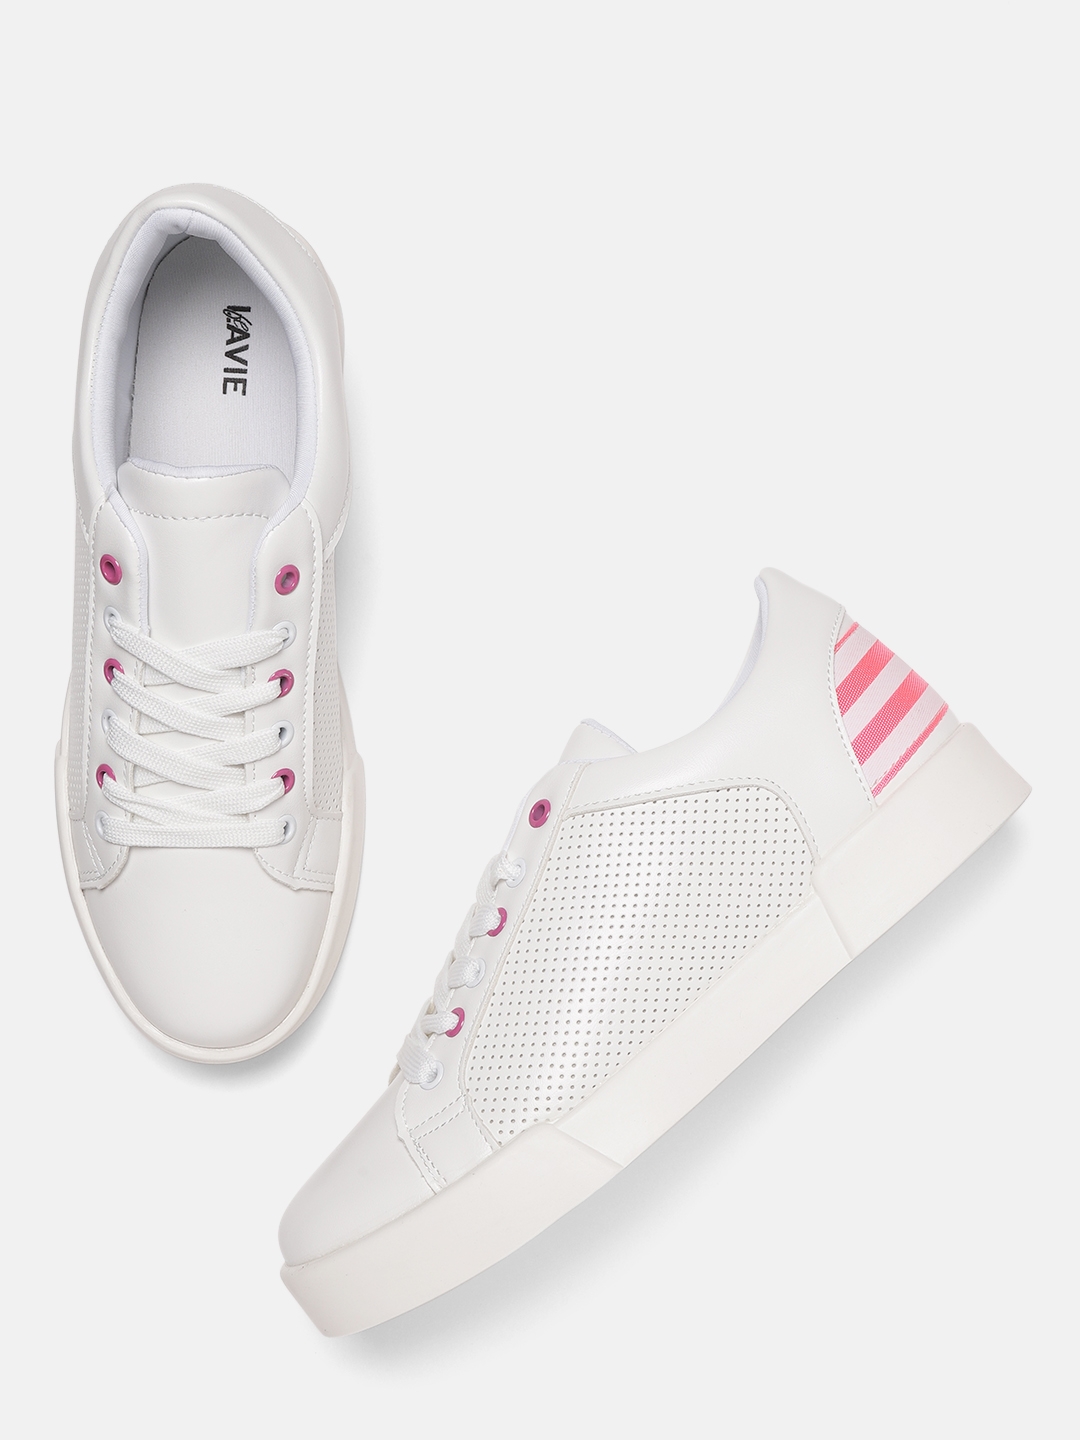 Buy Lavie Women's White Sneakers-7 UK/India (40 EU) (FODQ823021N0) at  Amazon.in